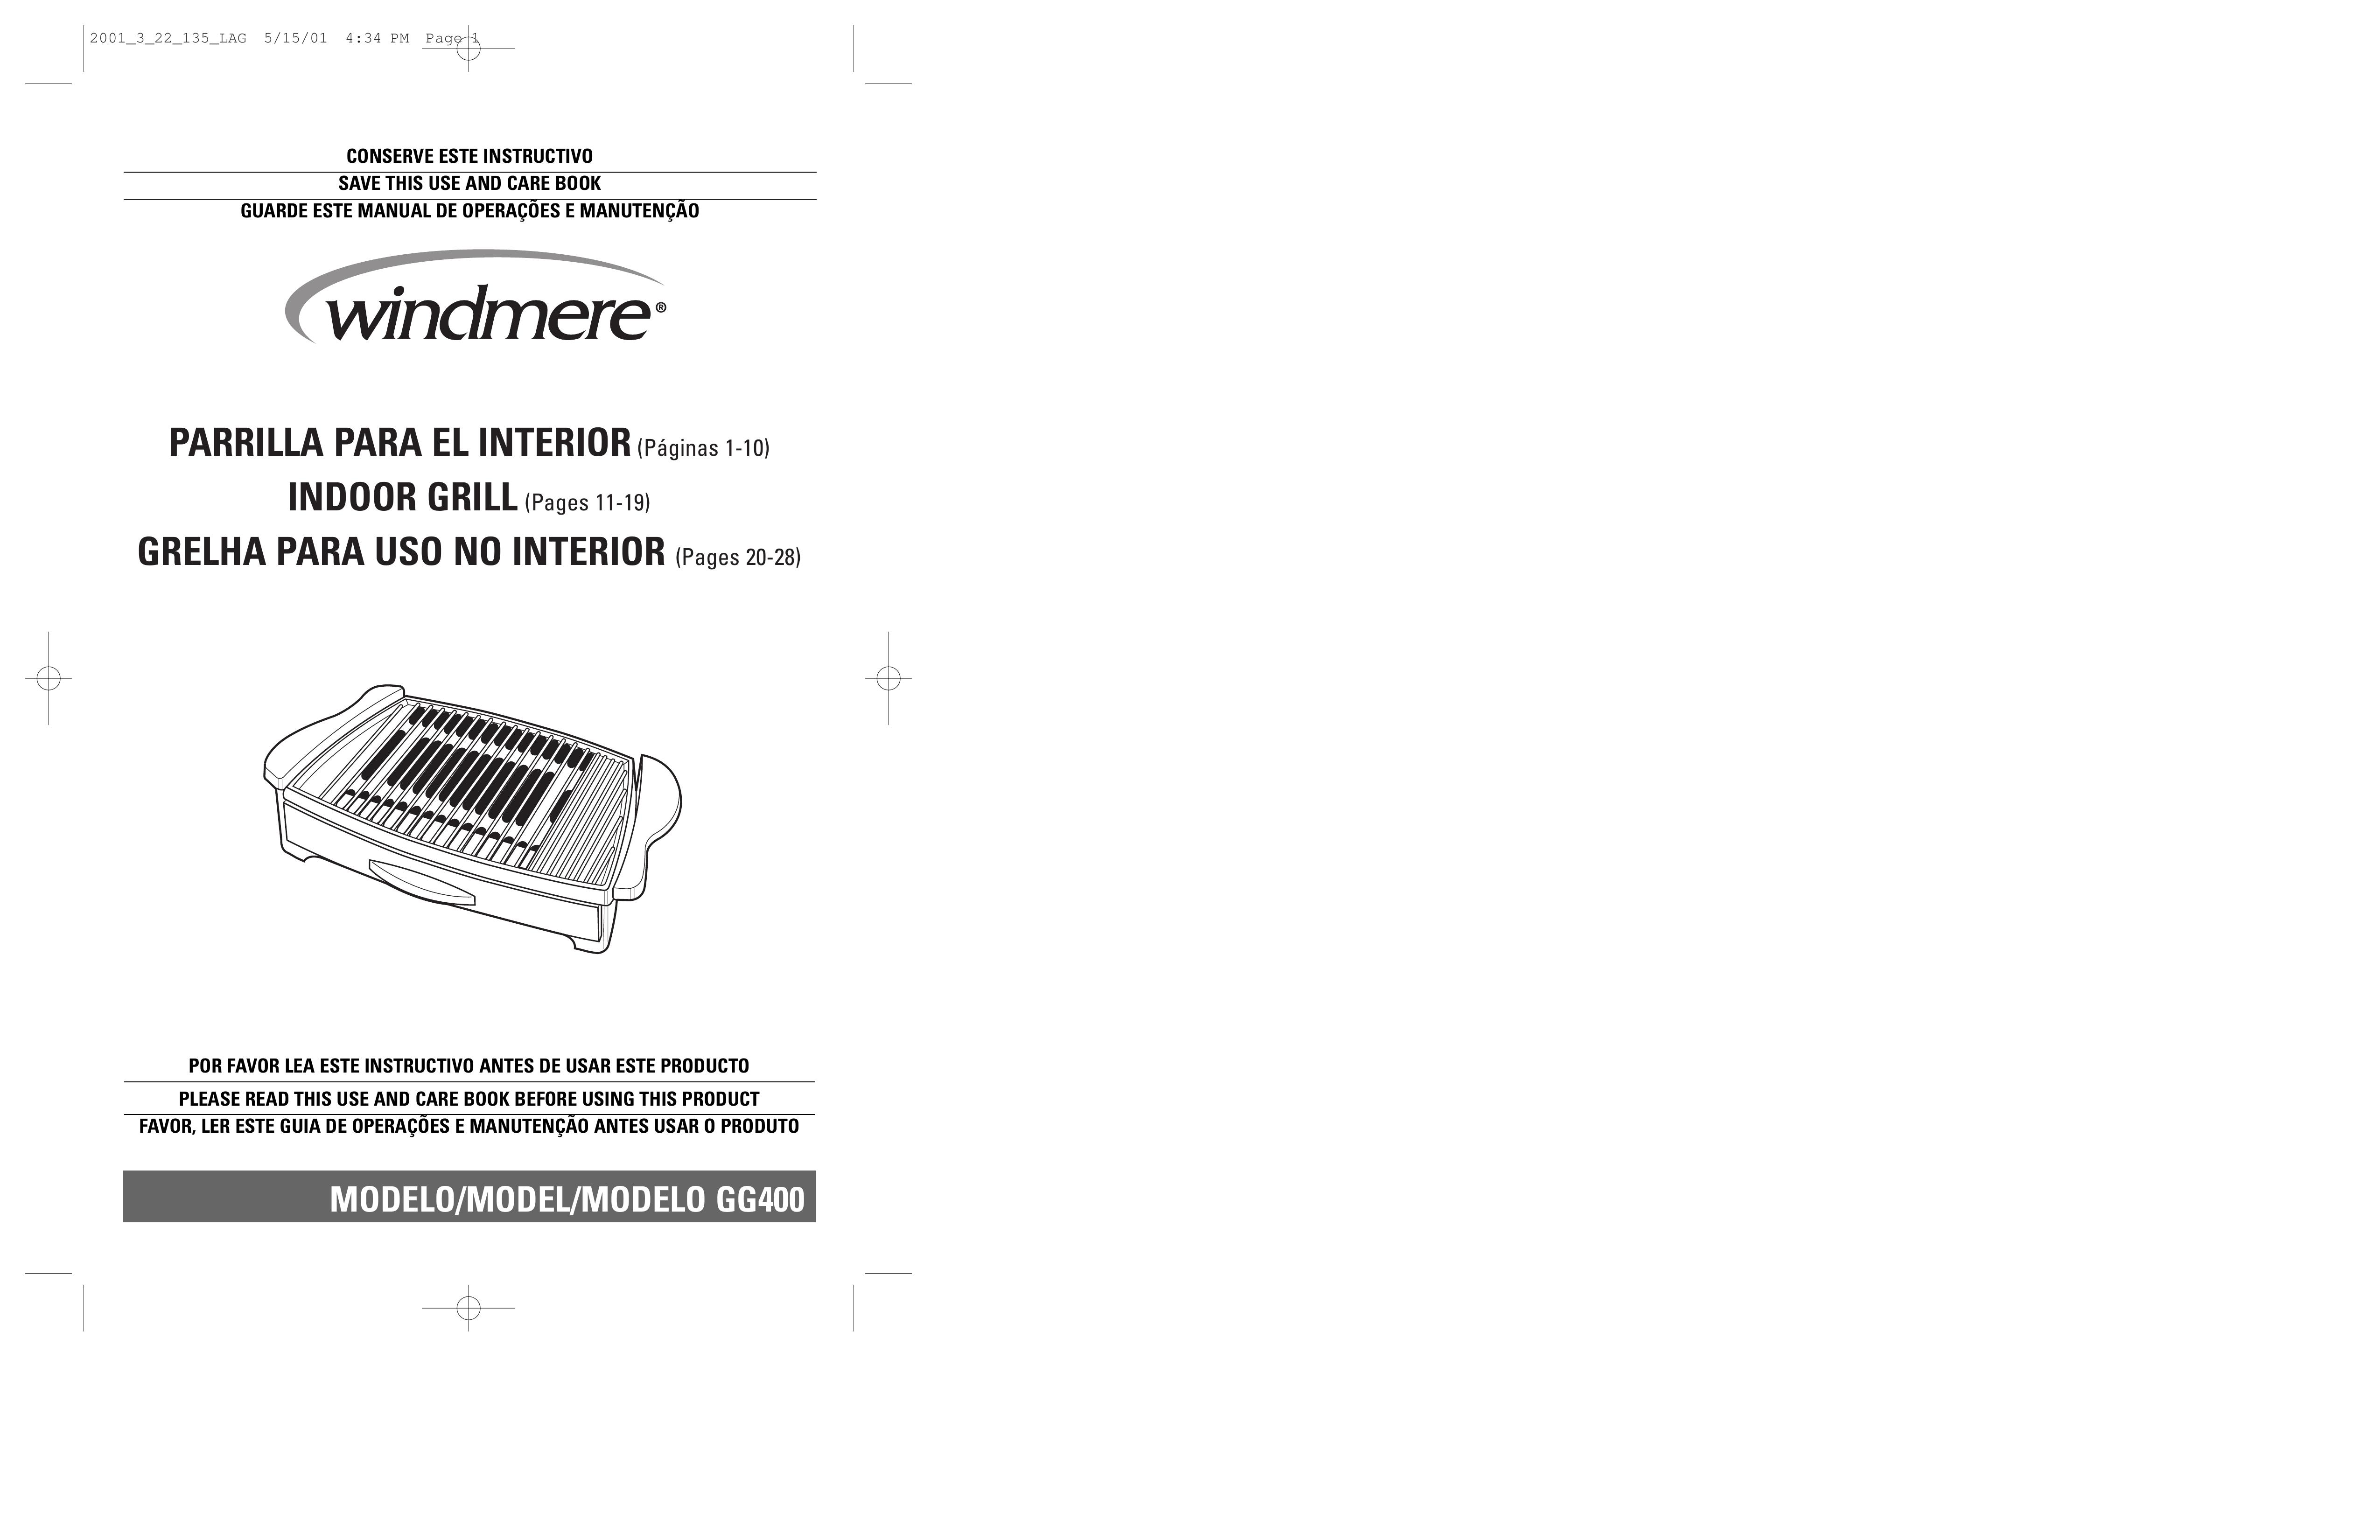 Windmere GG400 Gas Grill User Manual